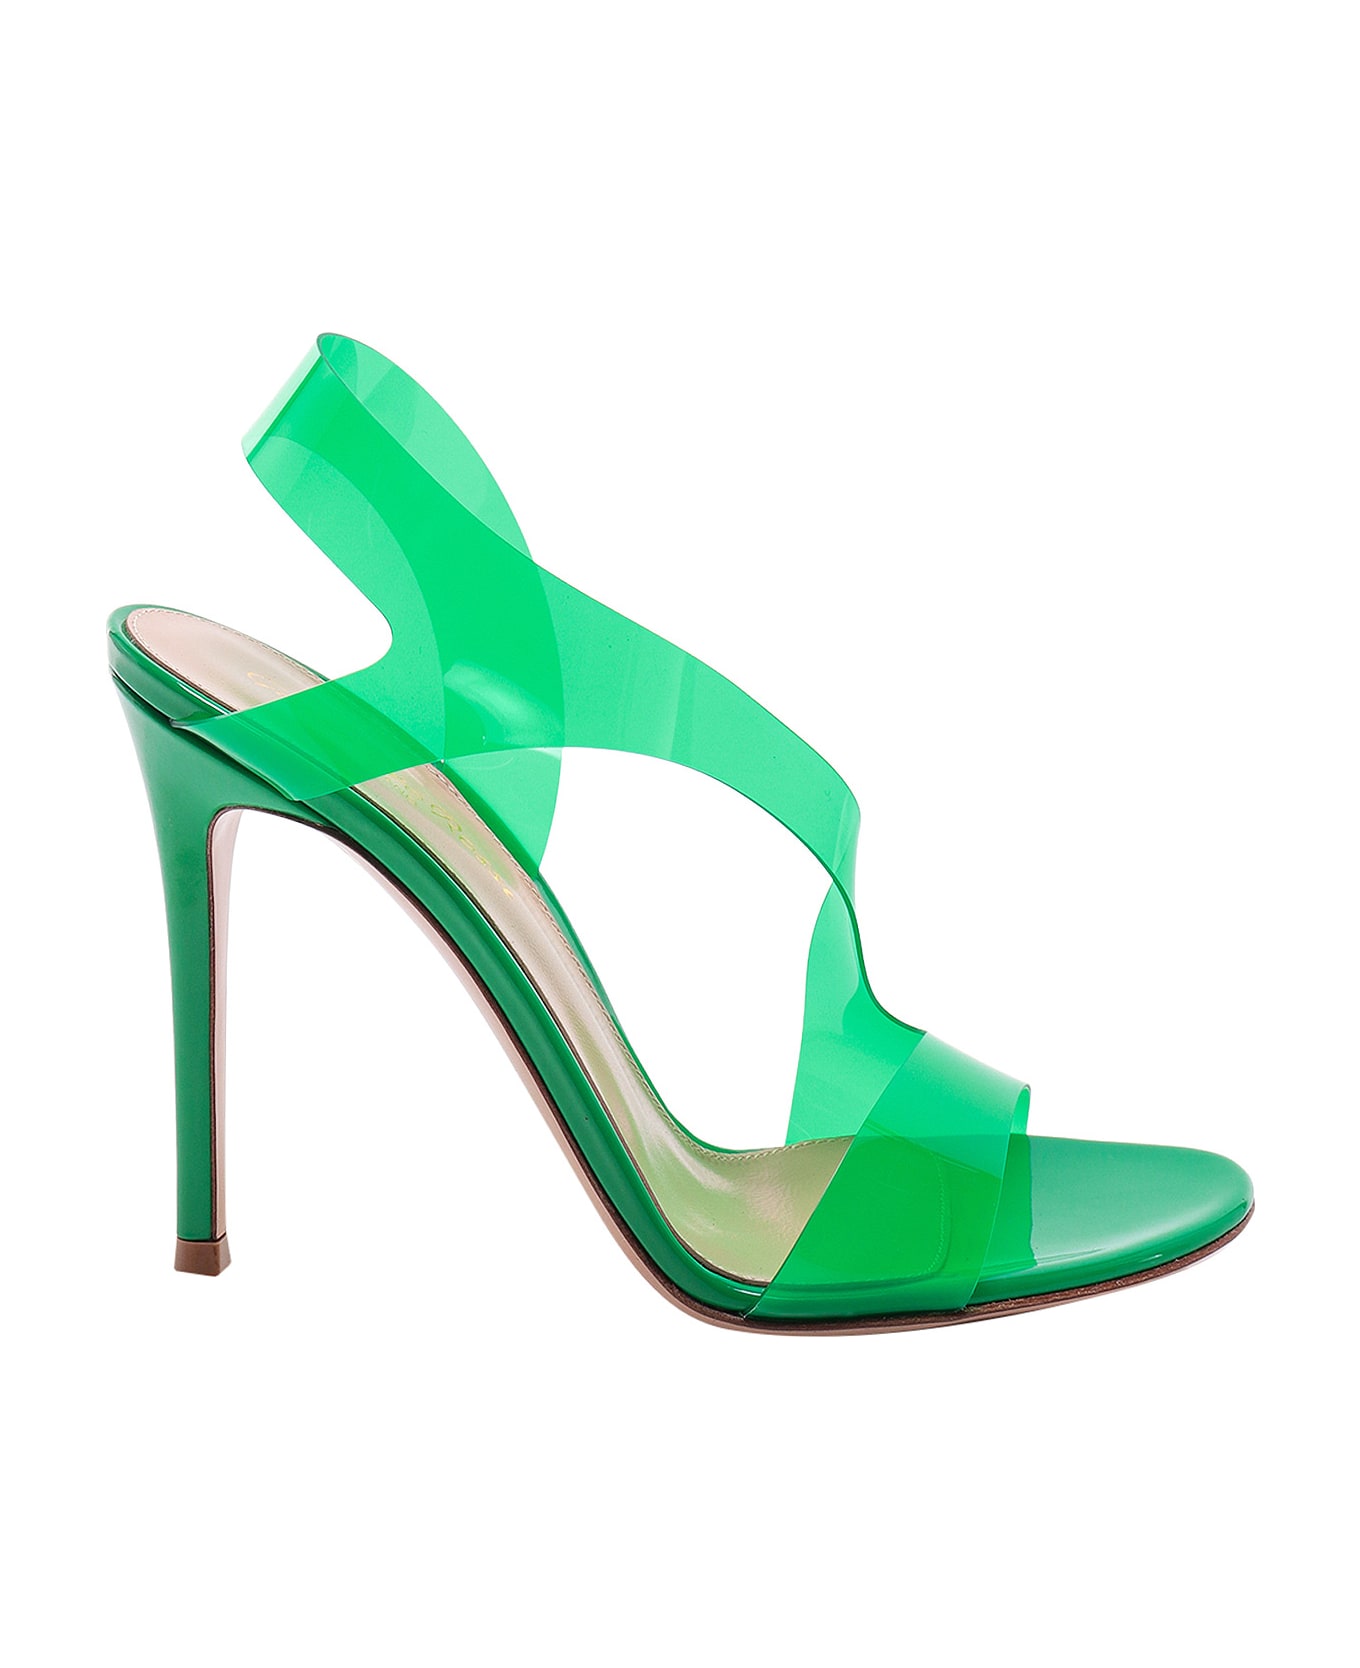 Gianvito Rossi Metropolis Sandals - Green